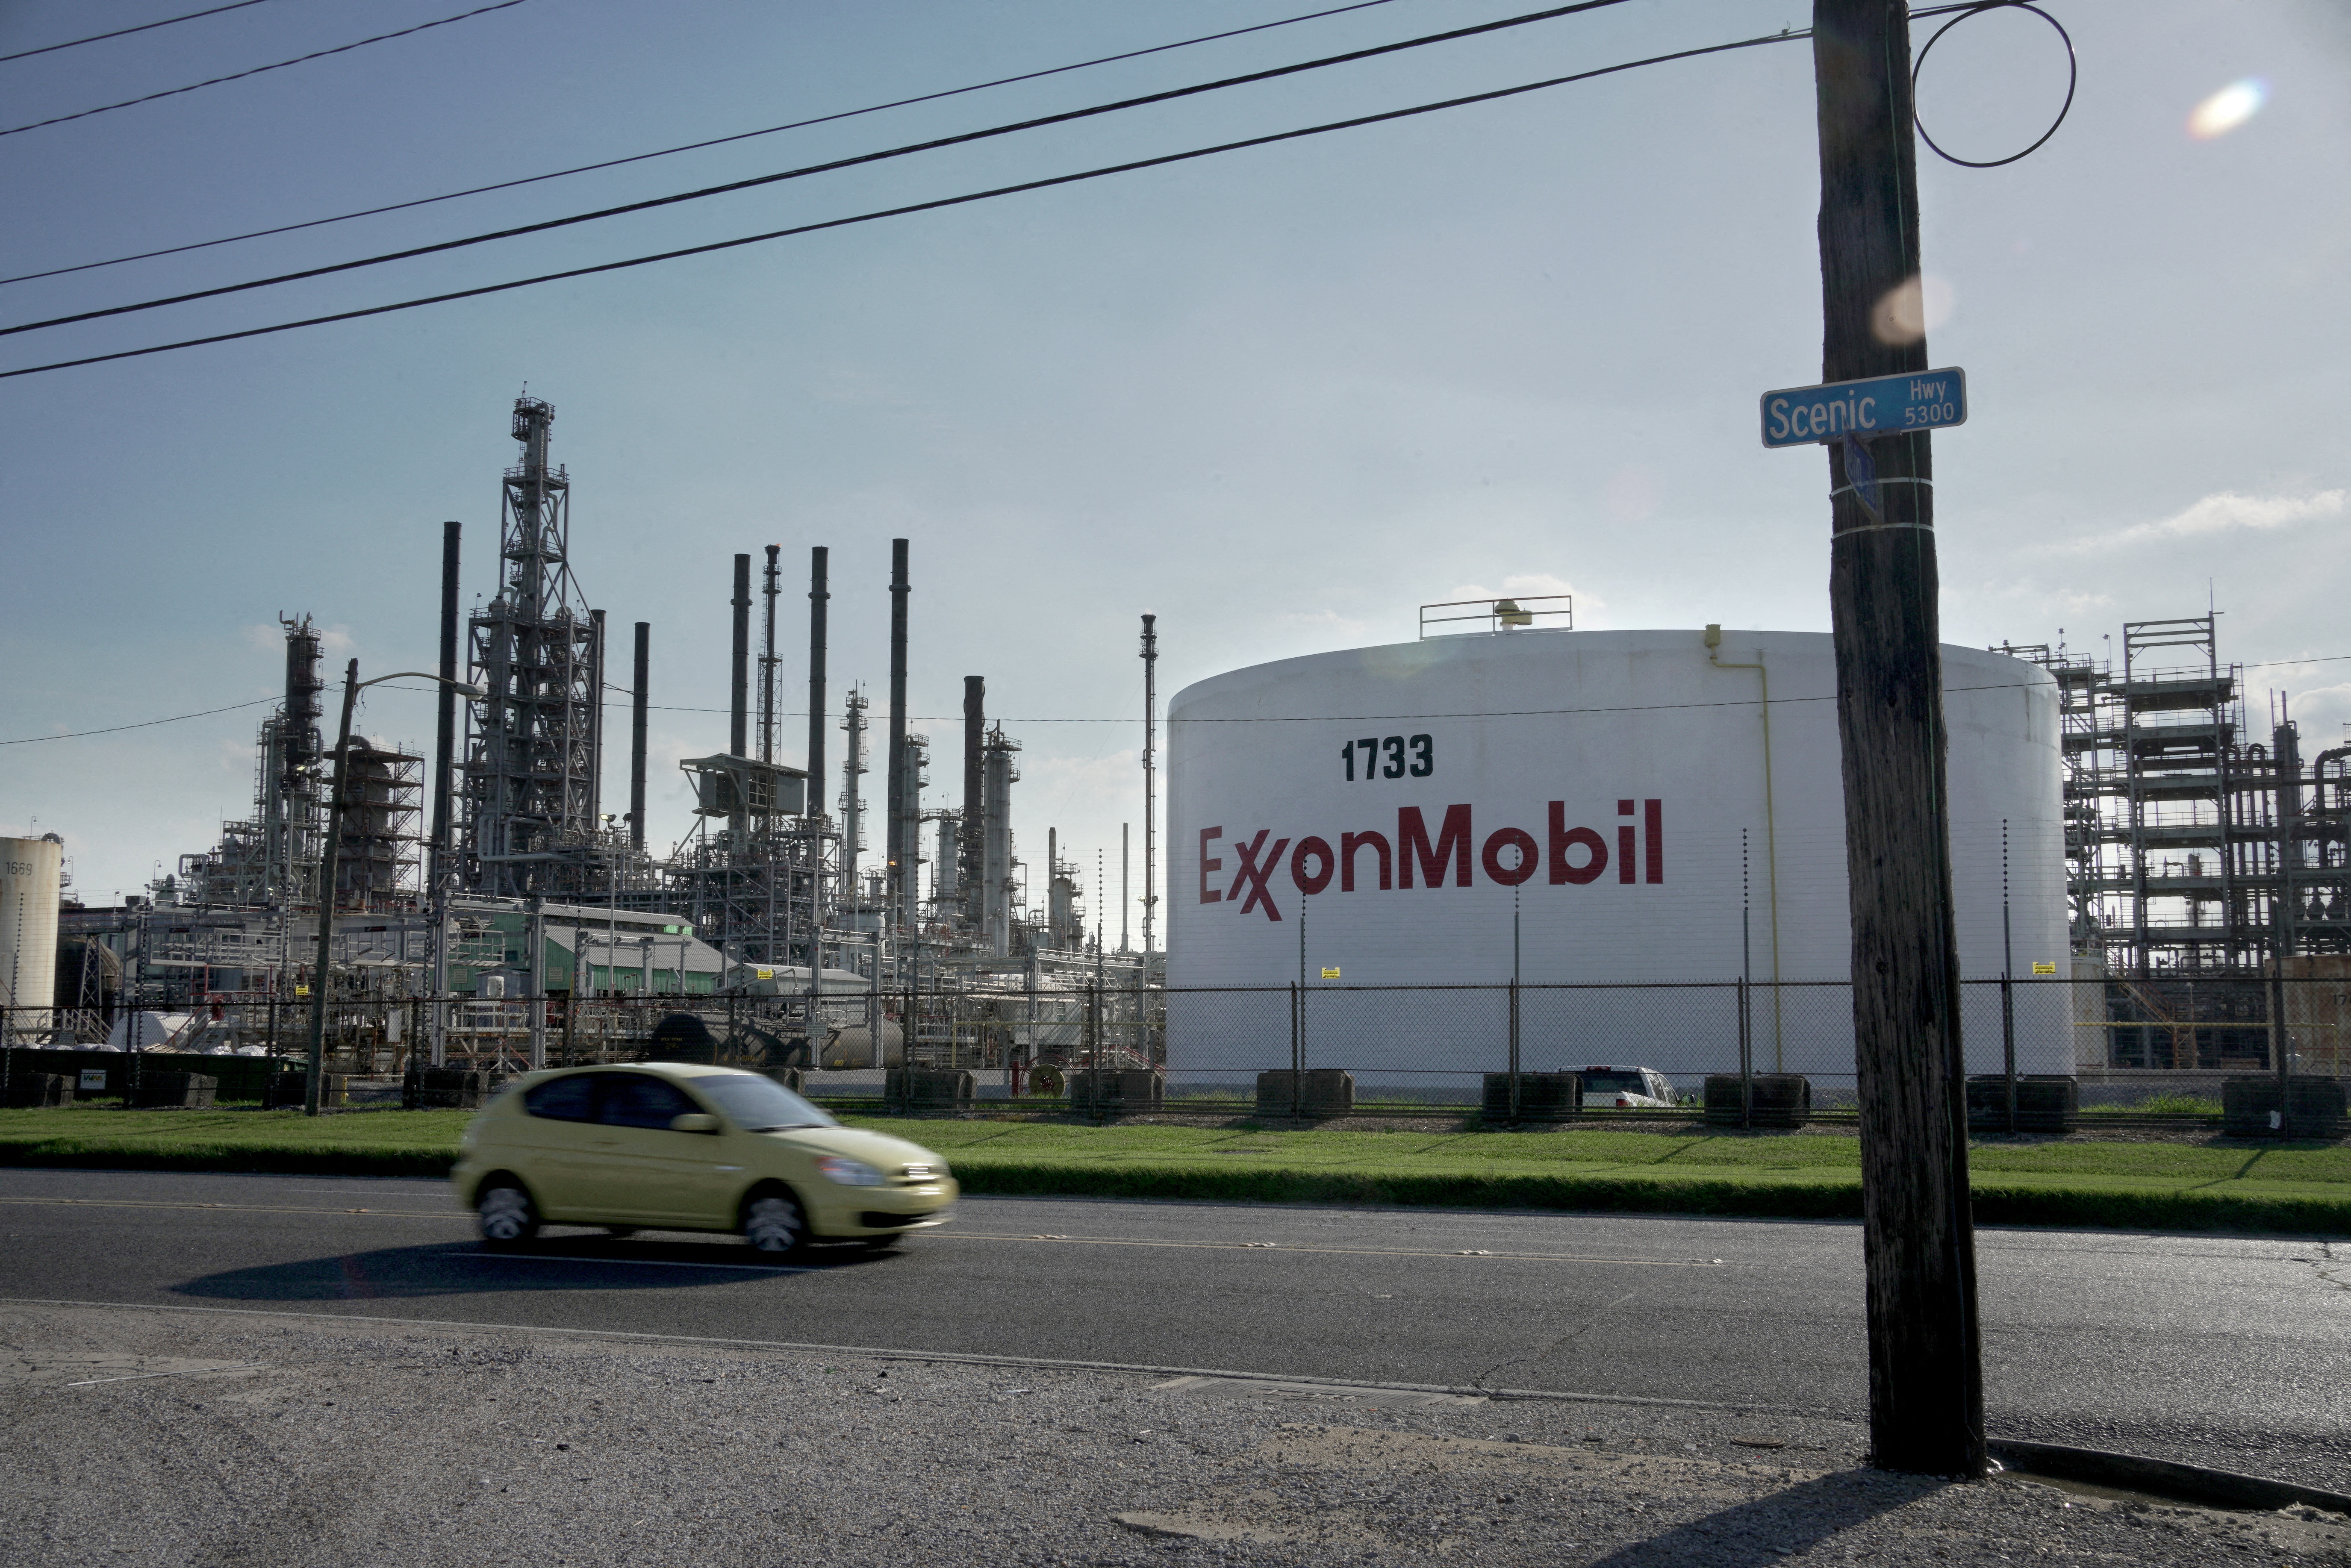 A view of the ExxonMobil Baton Rouge Refinery in Baton Rouge, Louisiana